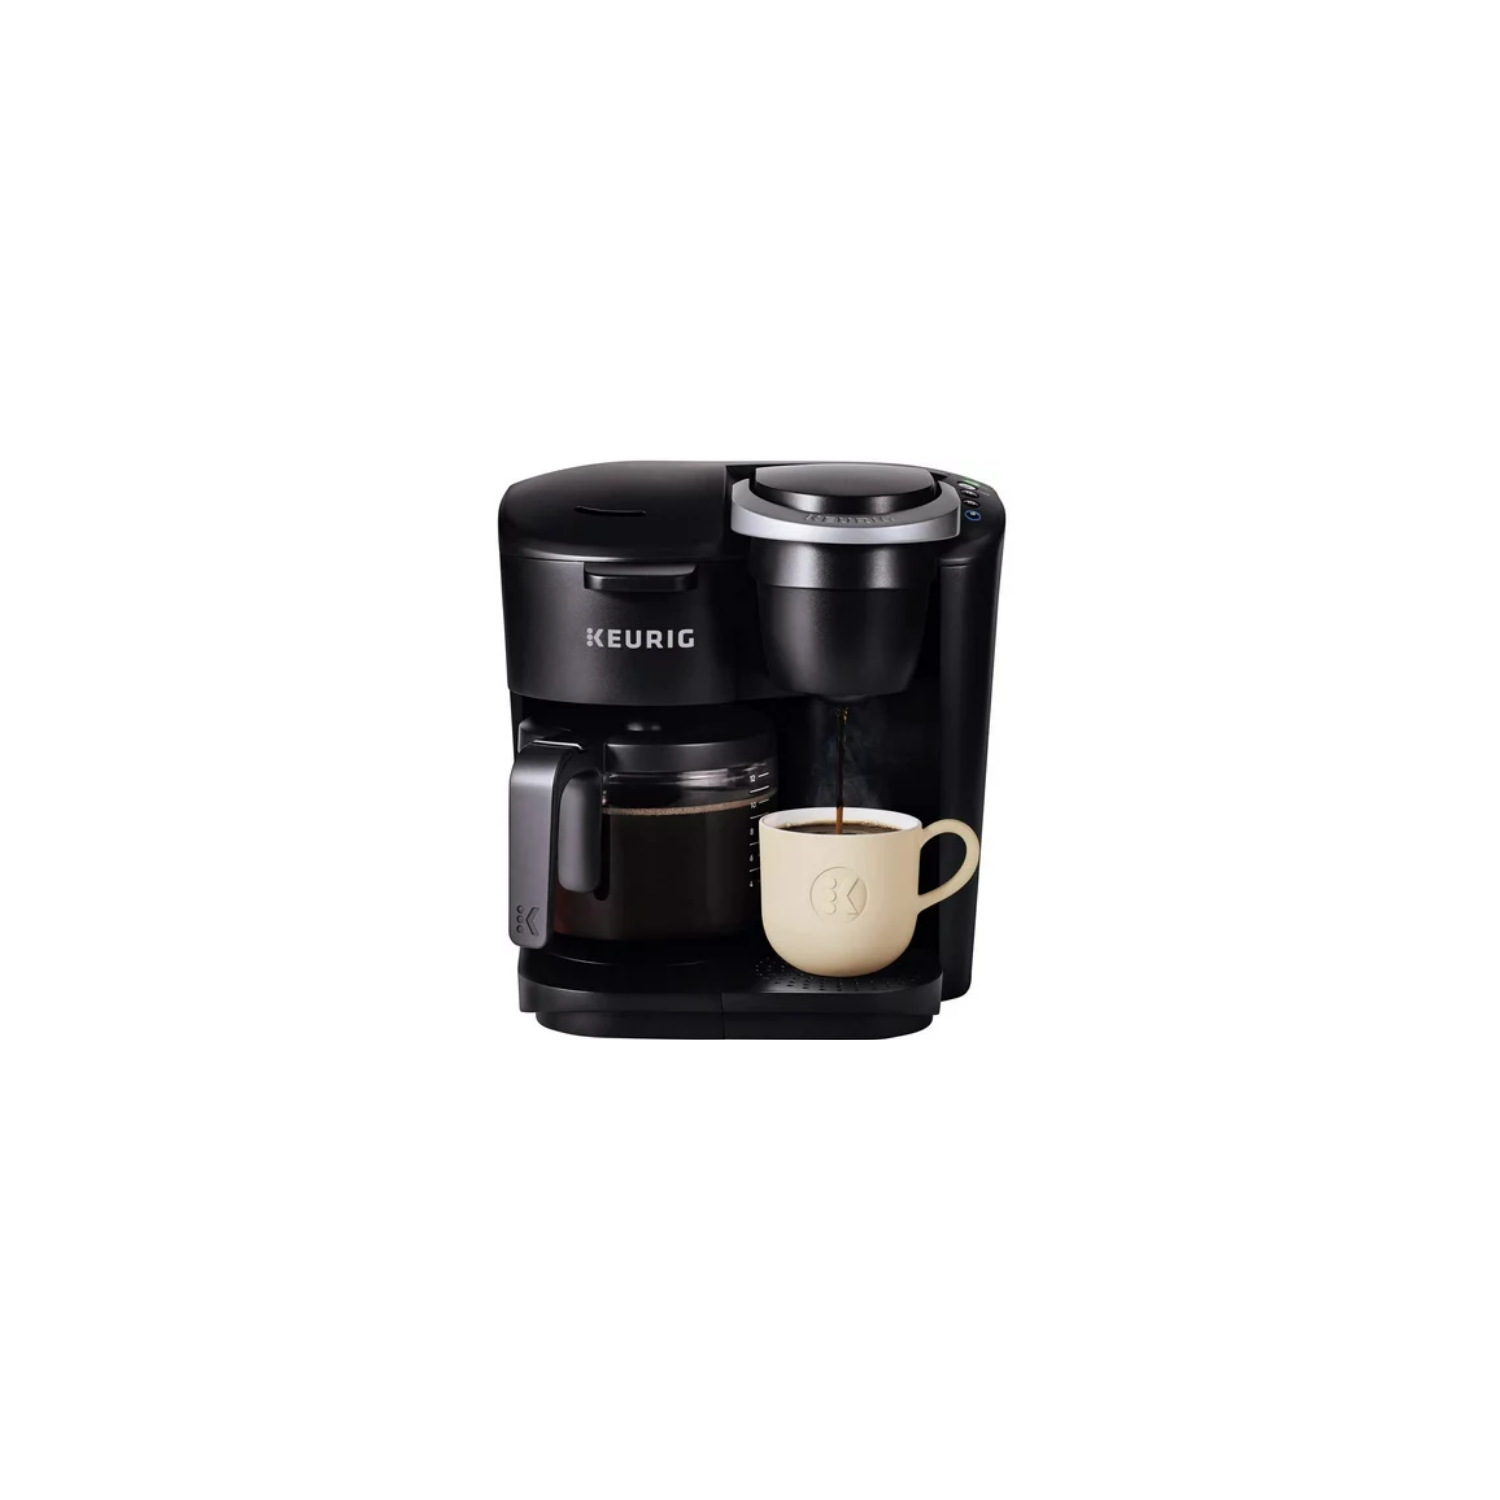 Refurbished (Good) - Keurig K-Duo Single Serve & Carafe Coffee Maker - Black